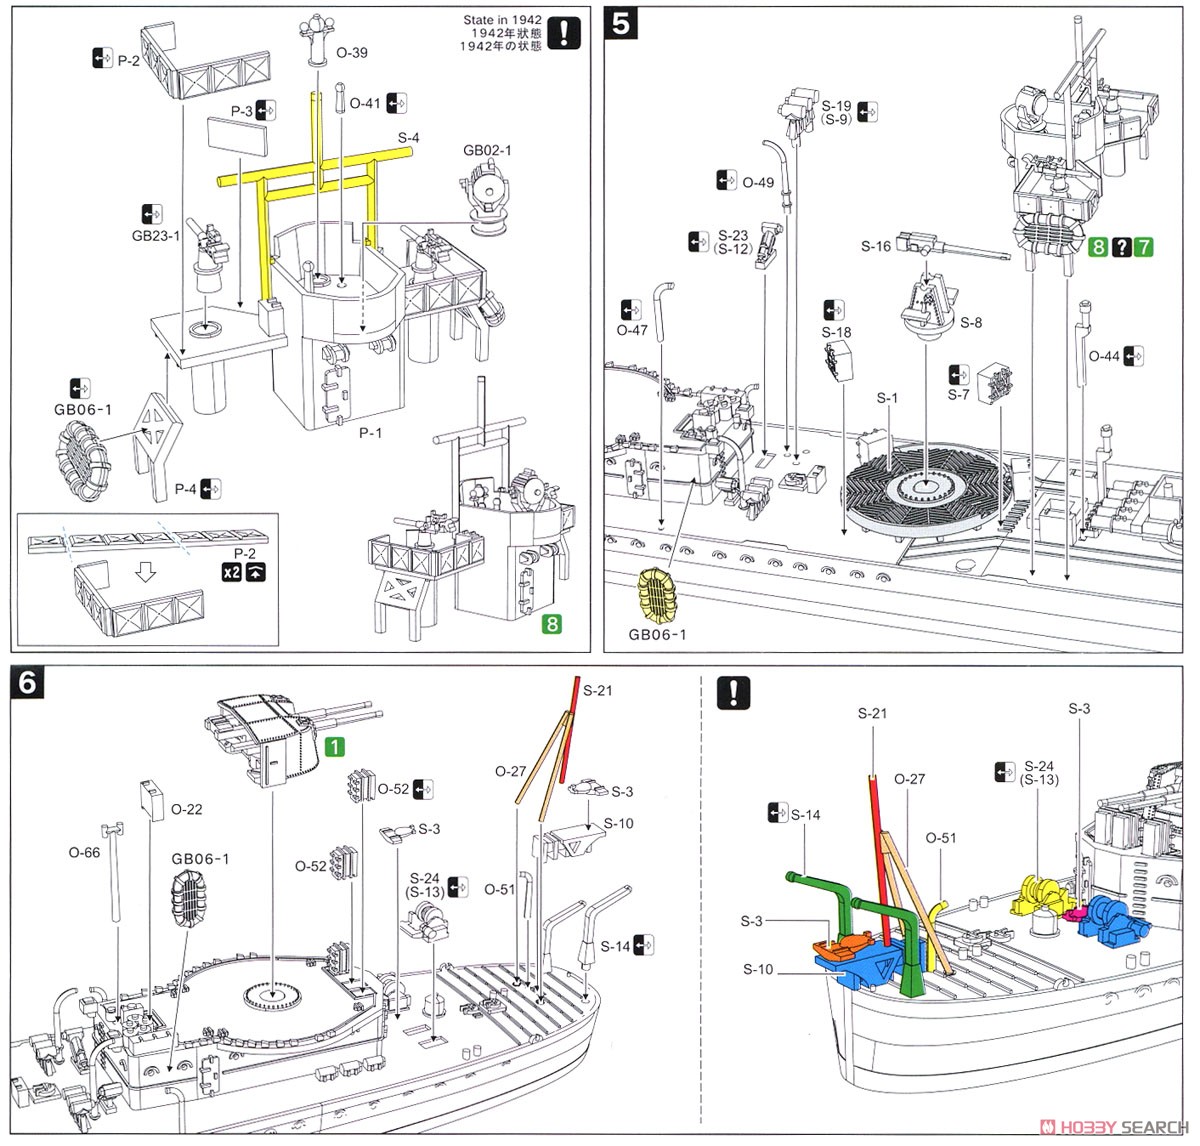 HMS Jupiter (Plastic model) Assembly guide4